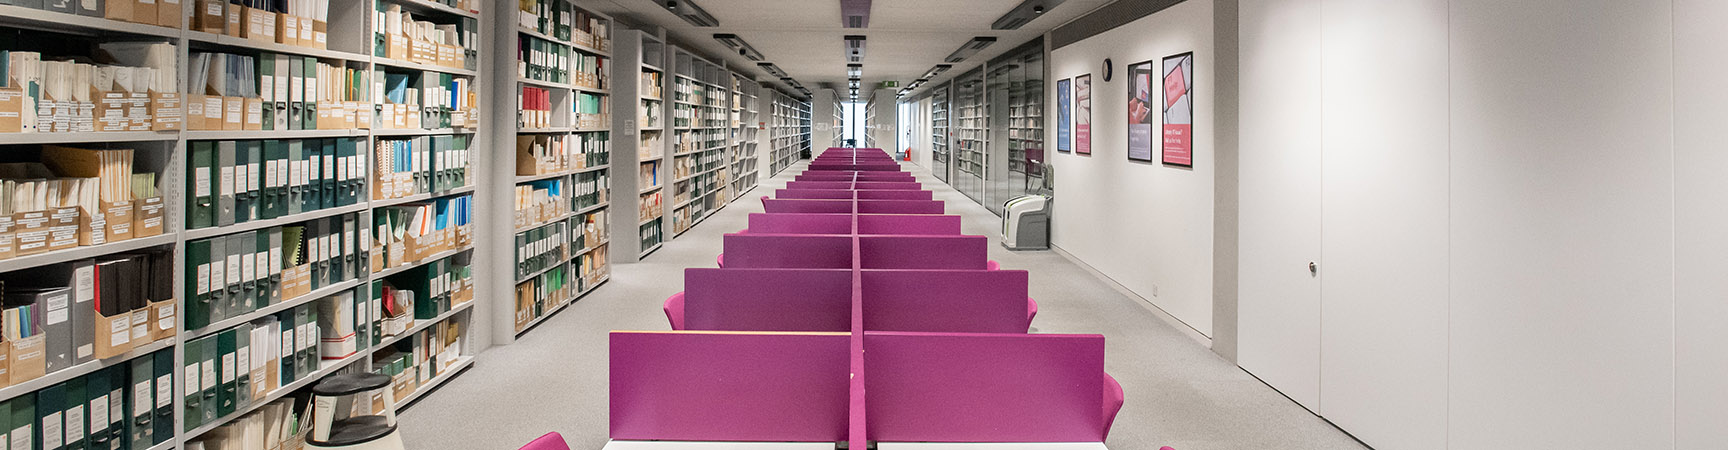 Rows of desks with purple separators